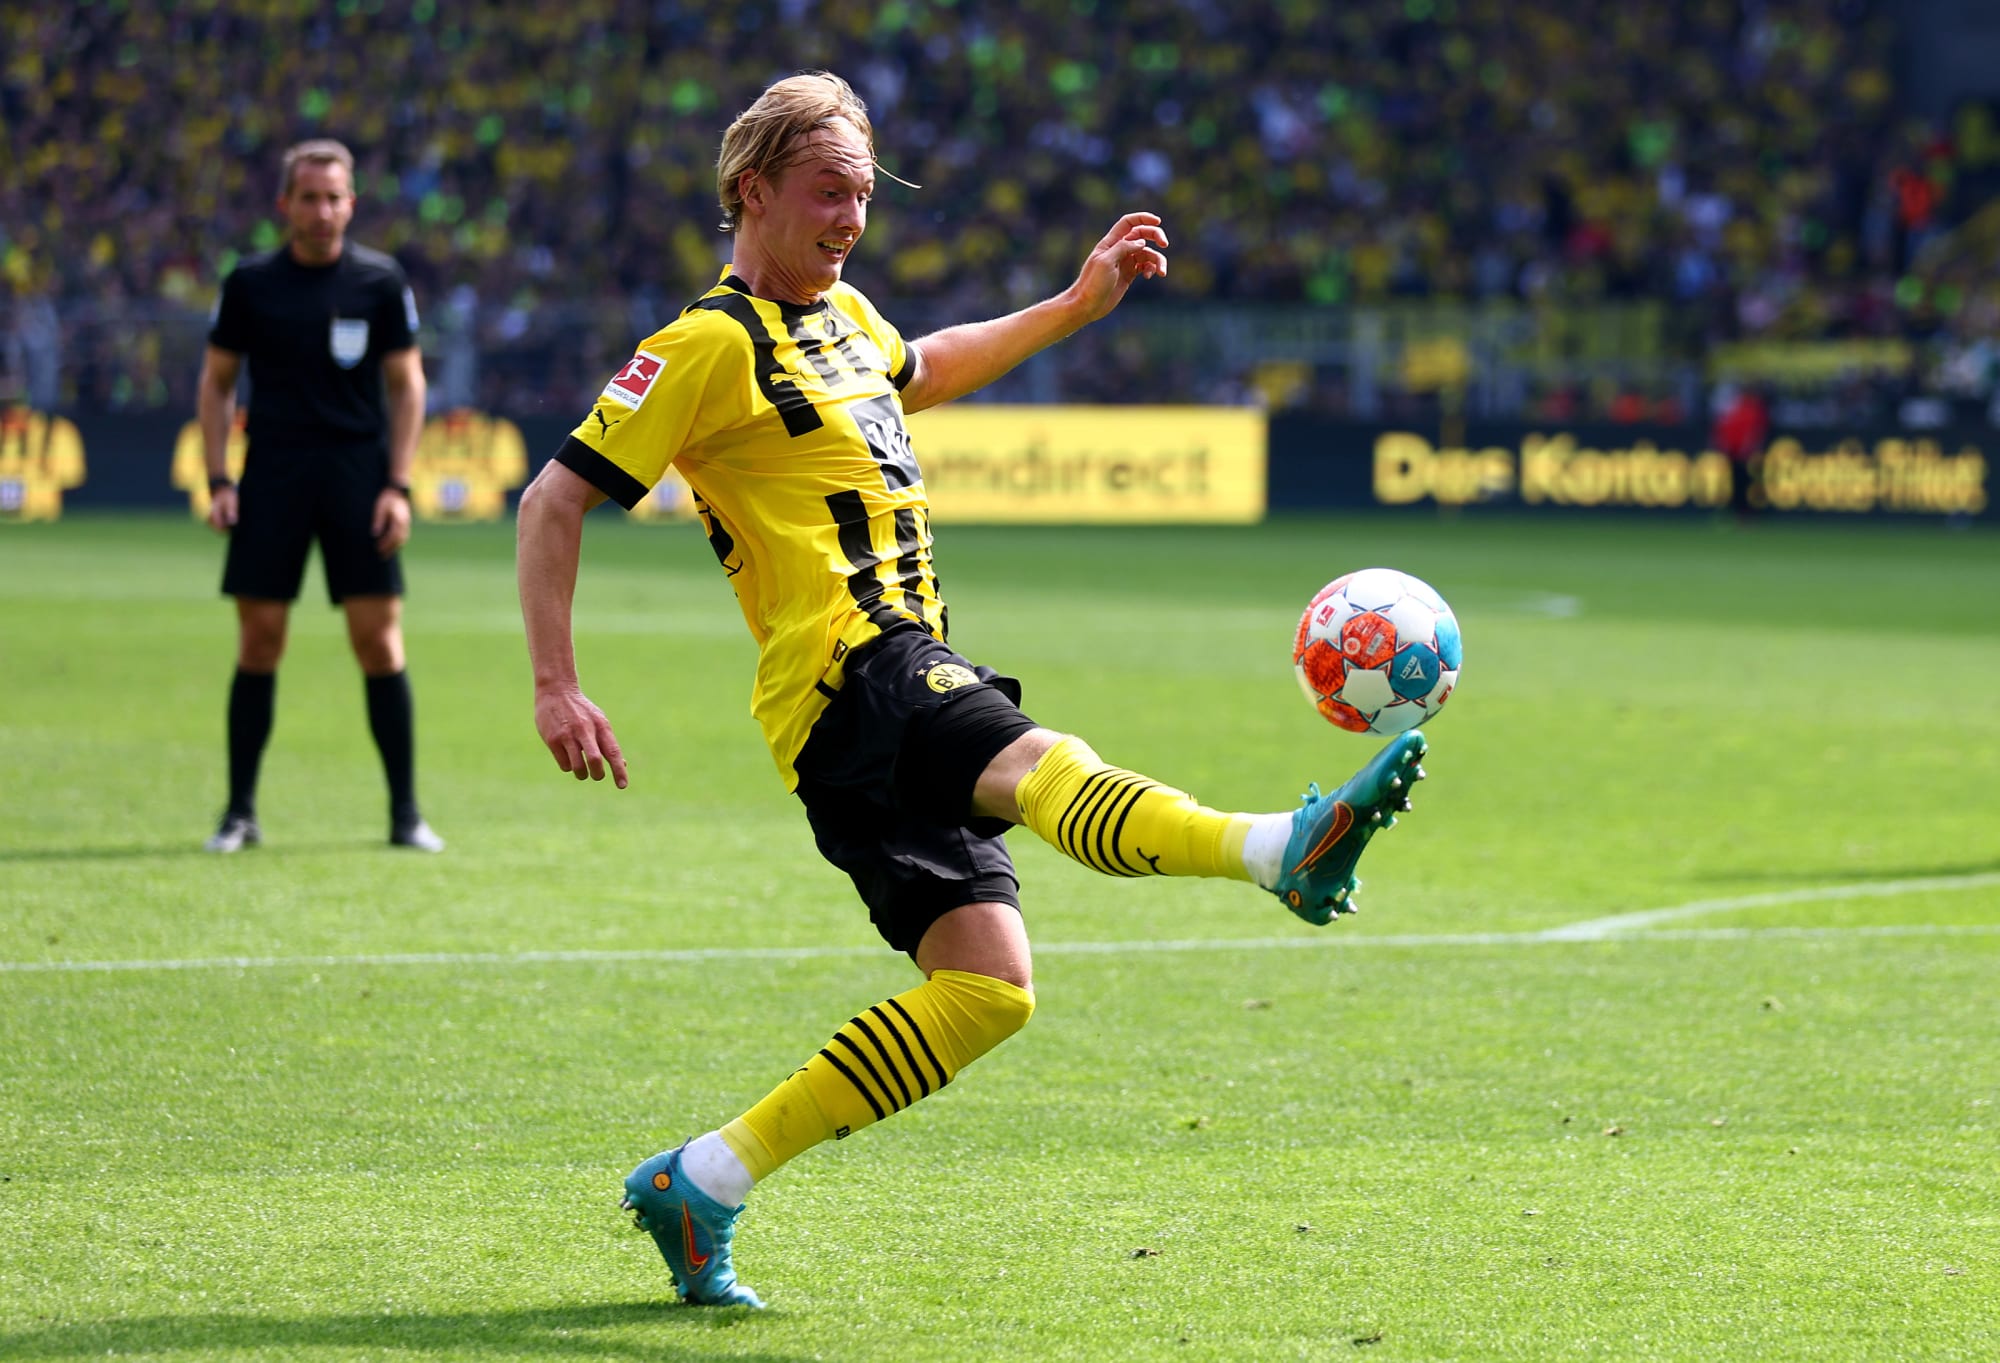 Borussia Dortmund 2021/22 home kit design leaked online